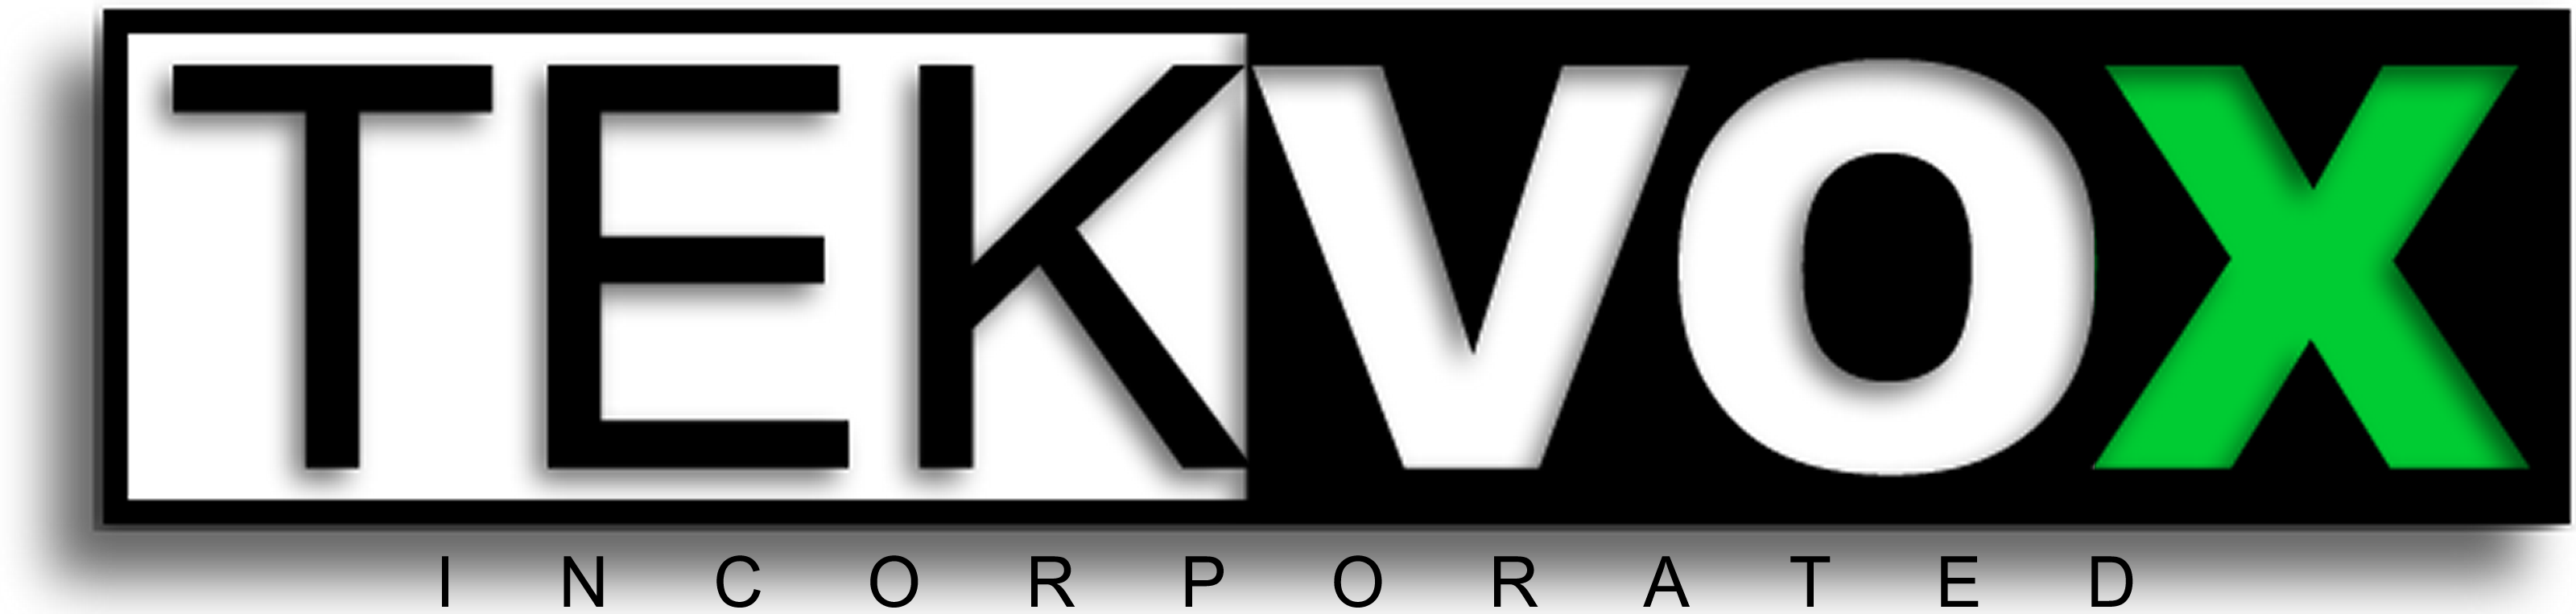 Tekvox logo